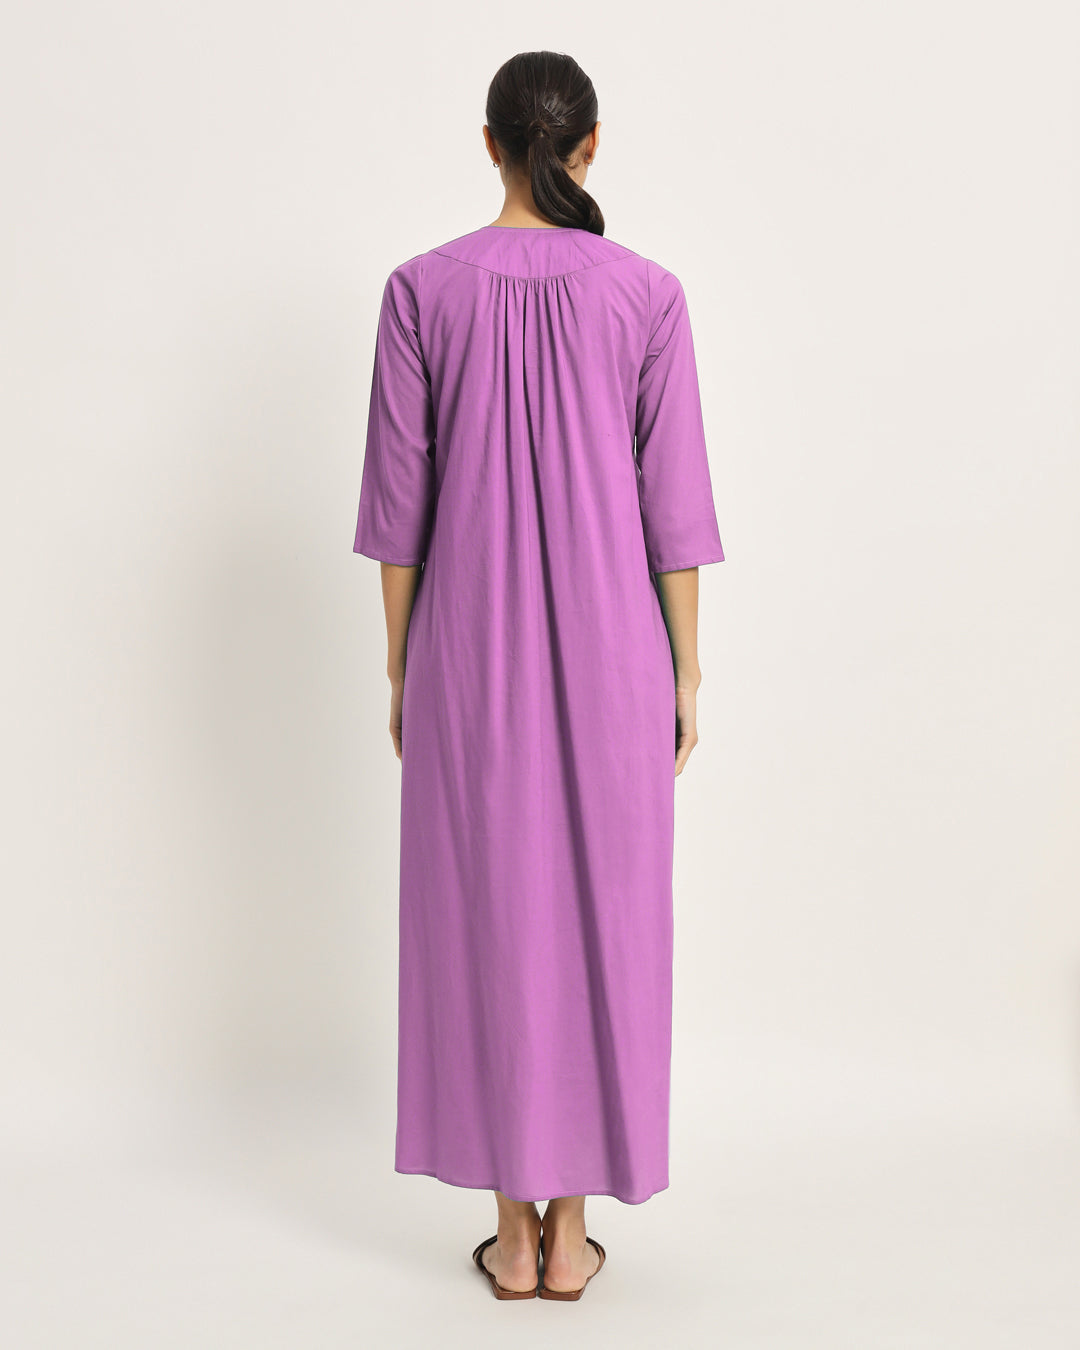 Combo: Iris Pink & Wisteria Purple Mommy Glow Maternity & Nursing Dress